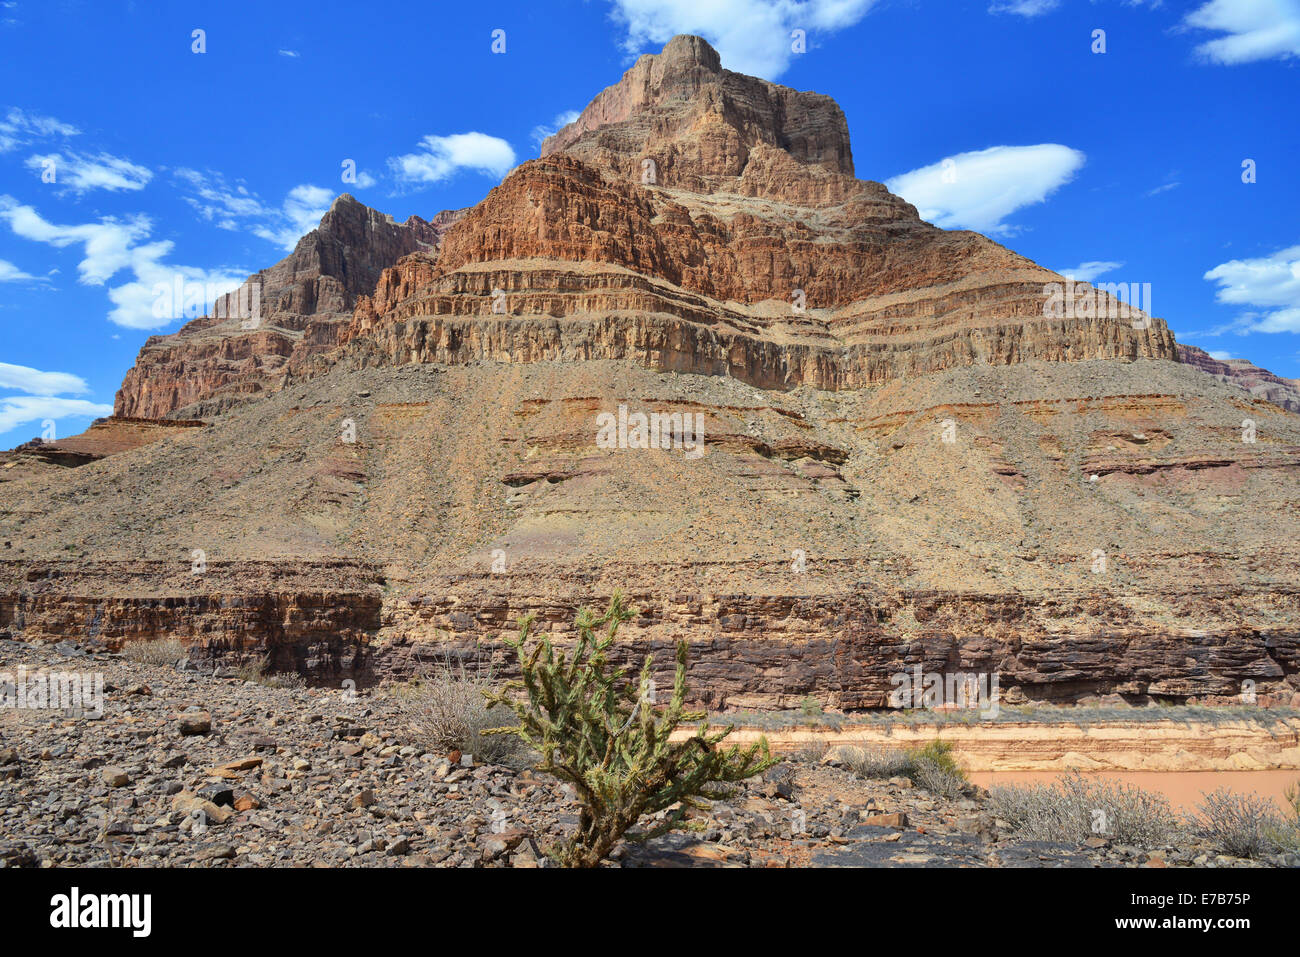 The Grand Canyon, Arizona Stock Photo